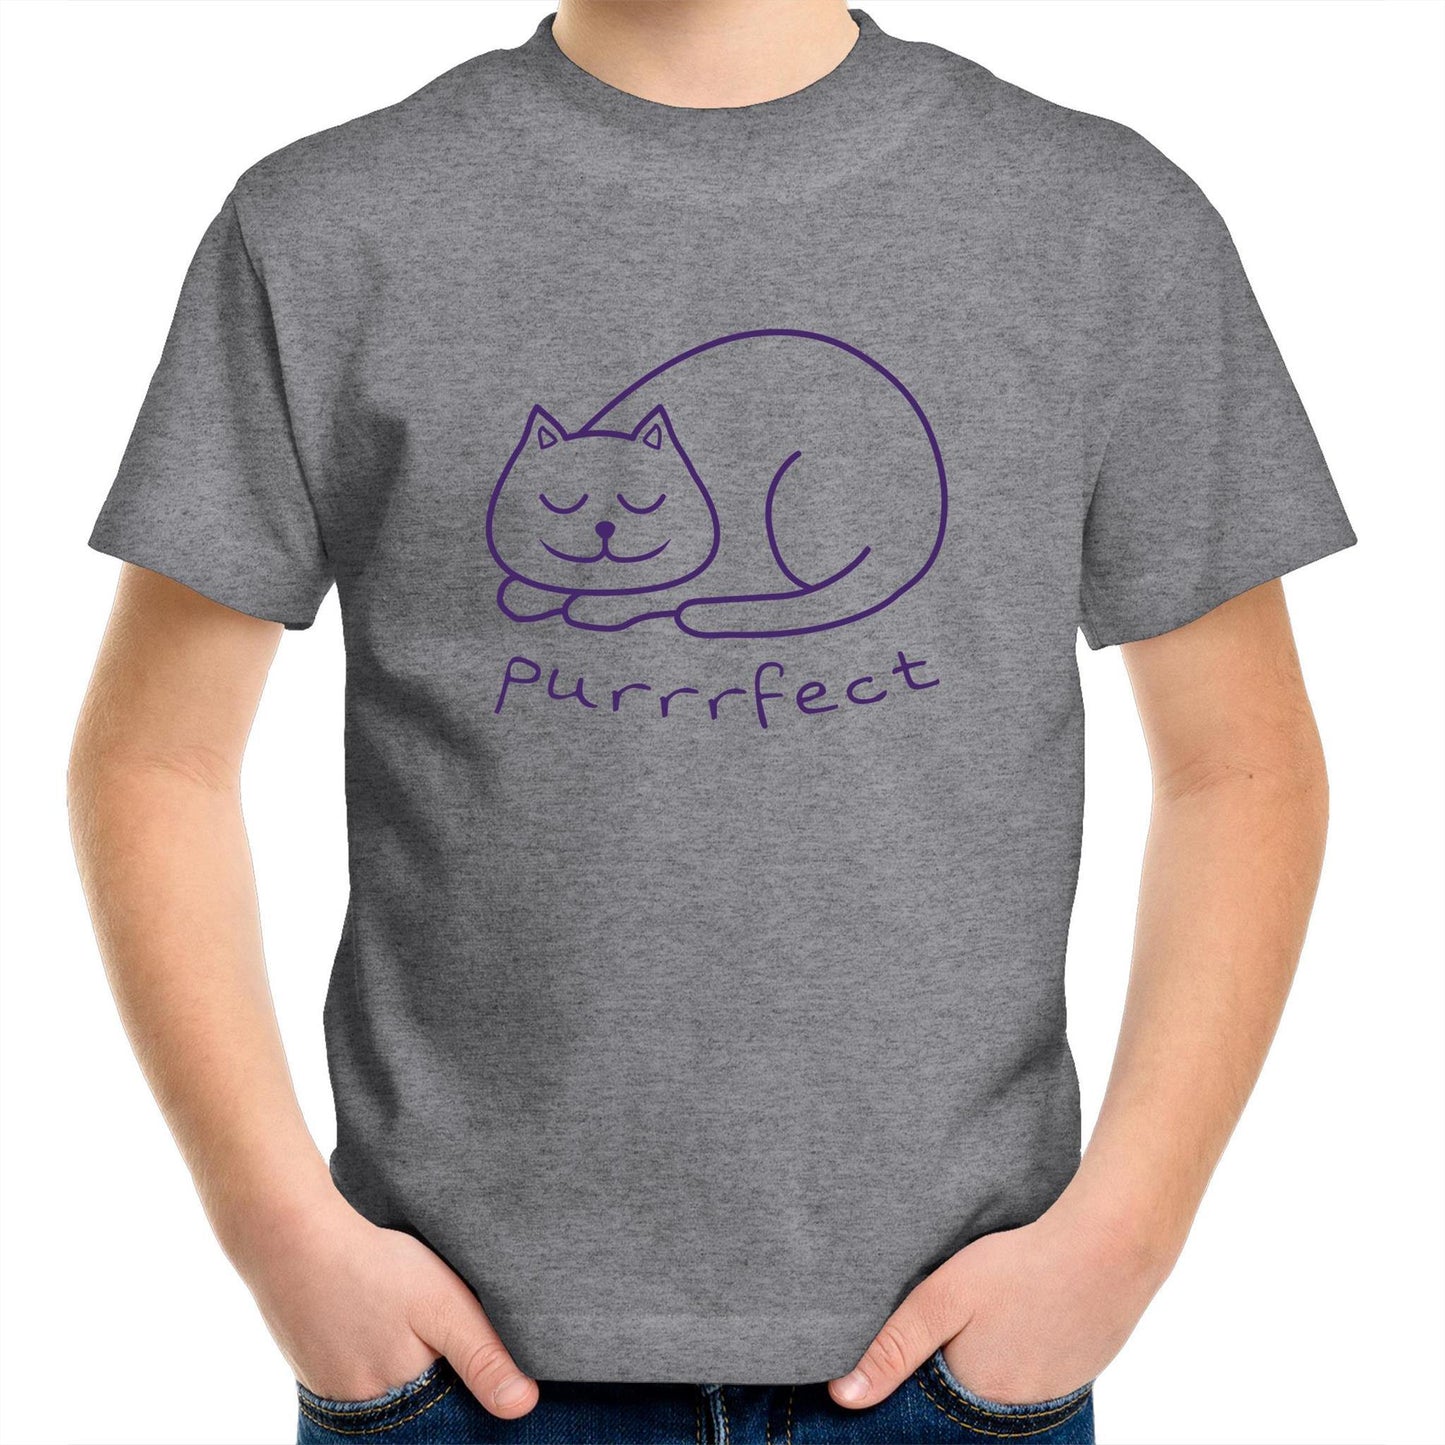 Purrrfect - Kids Youth Crew T-Shirt Grey Marle Kids Youth T-shirt animal